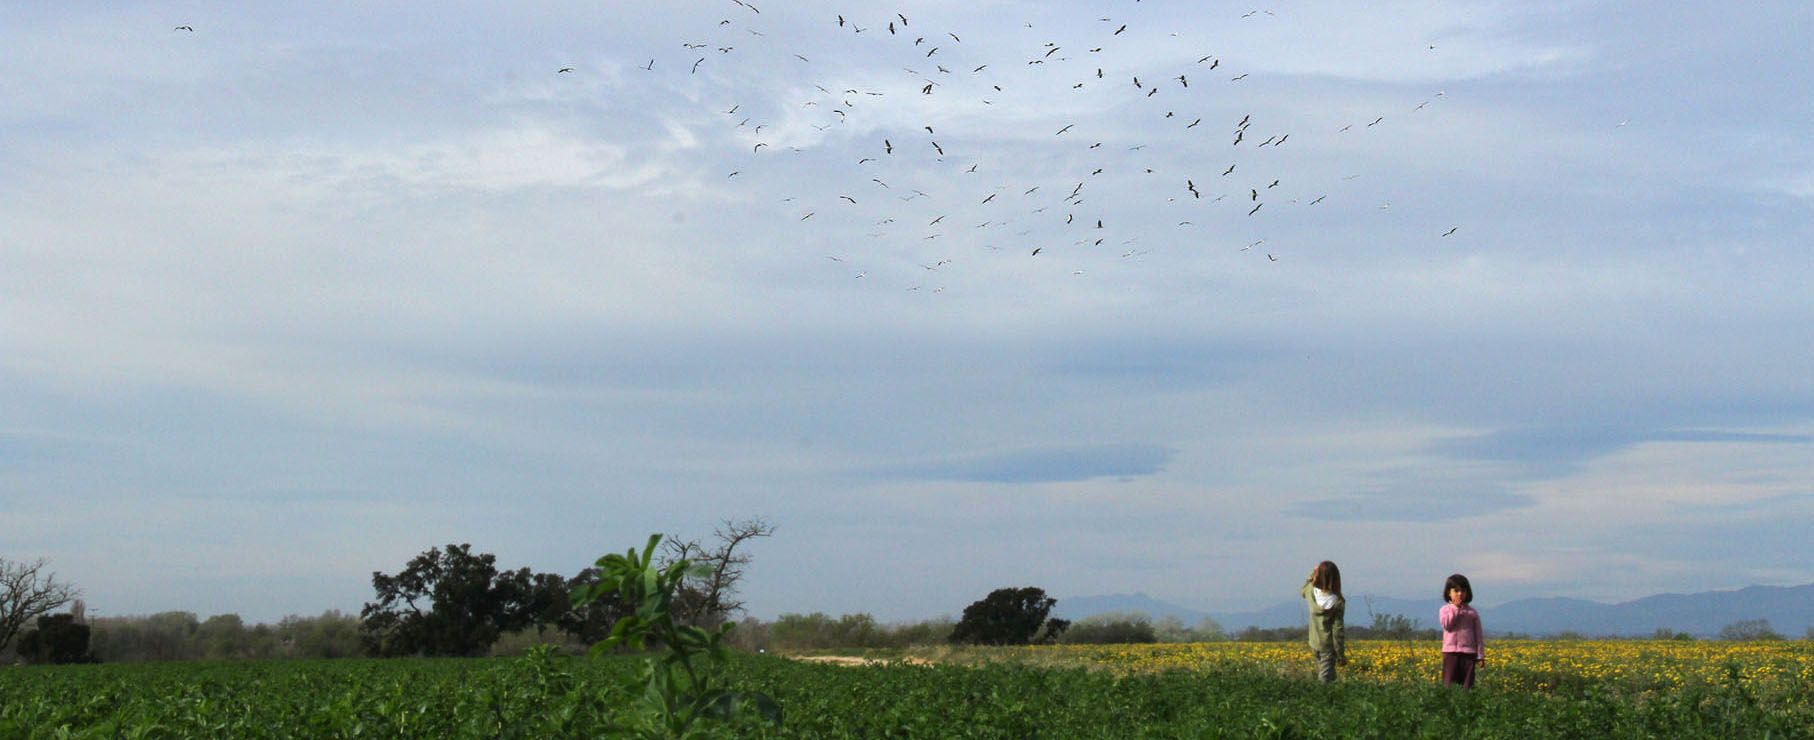 cranes_storks_migration_familiar_nature